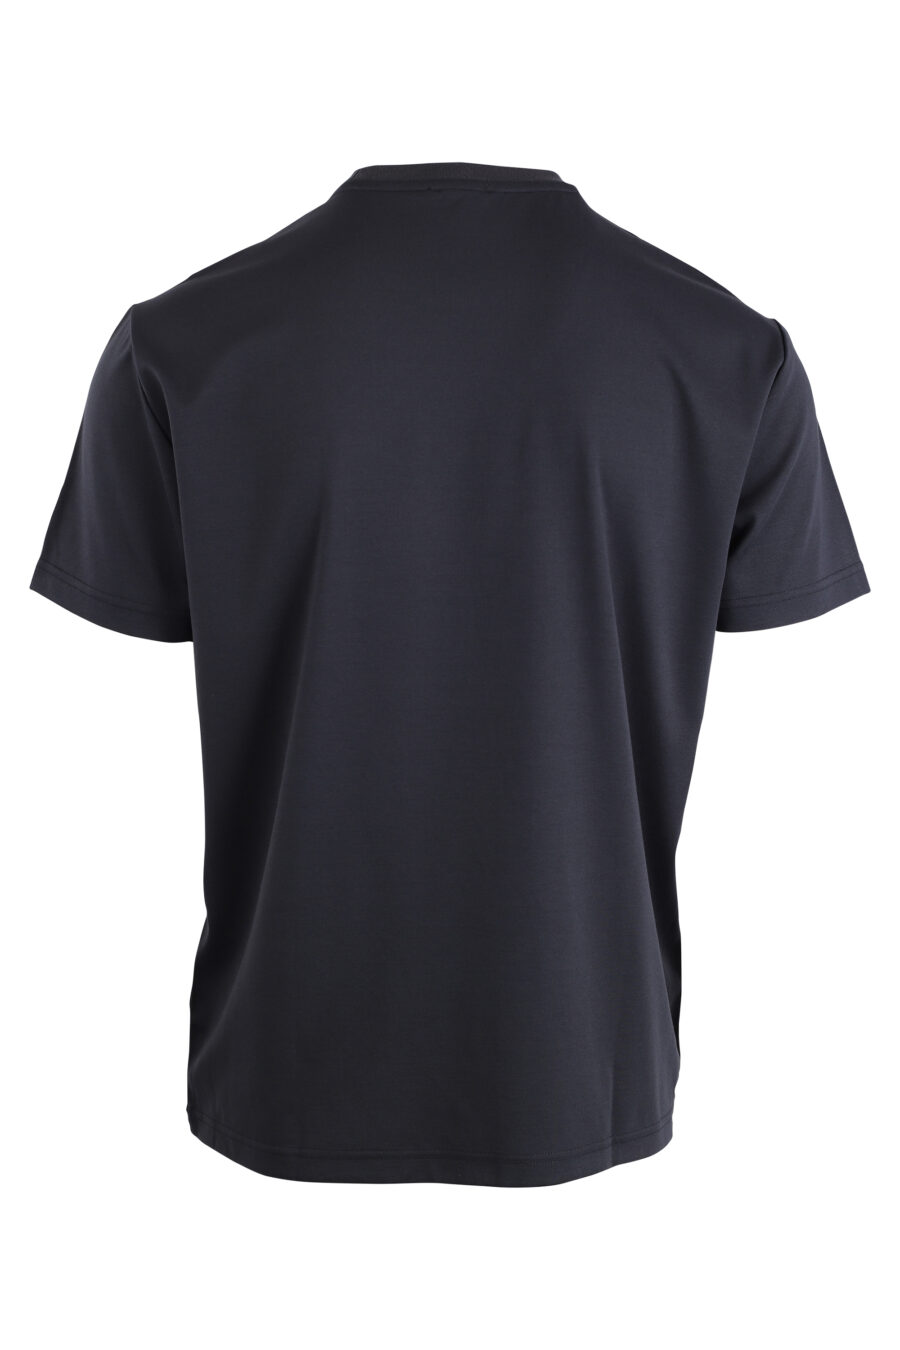 Camiseta azul oscura con logo "lux identity" monogram - IMG 4239